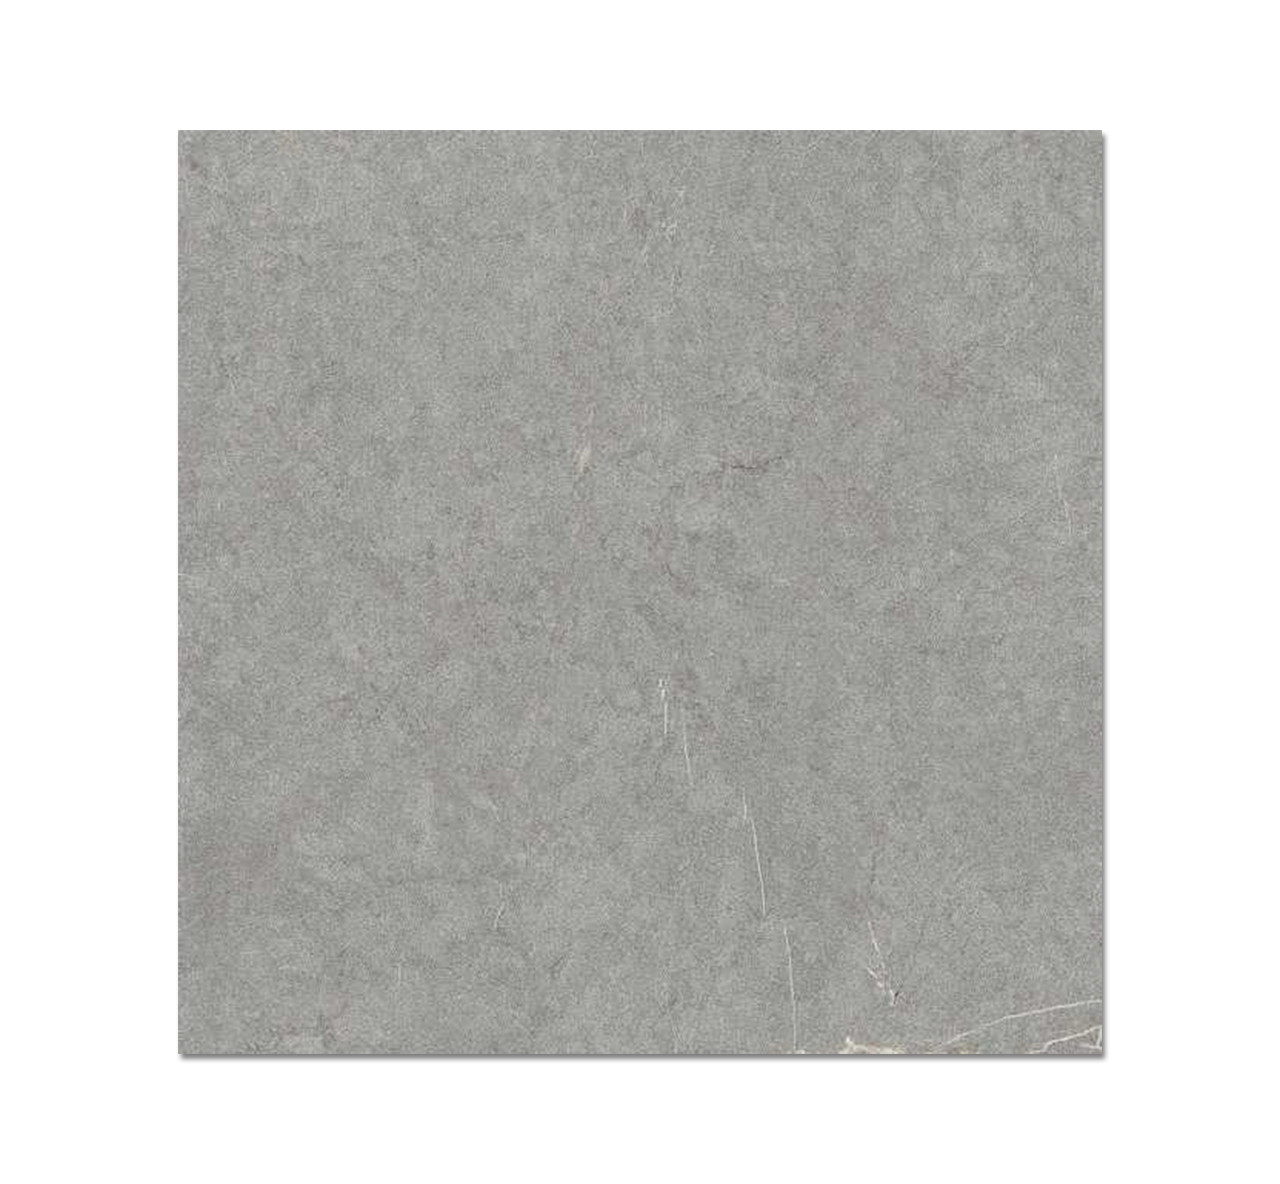 Grespania Niza Gris Stone Effect Floor Tiles (60cm x 60cm)